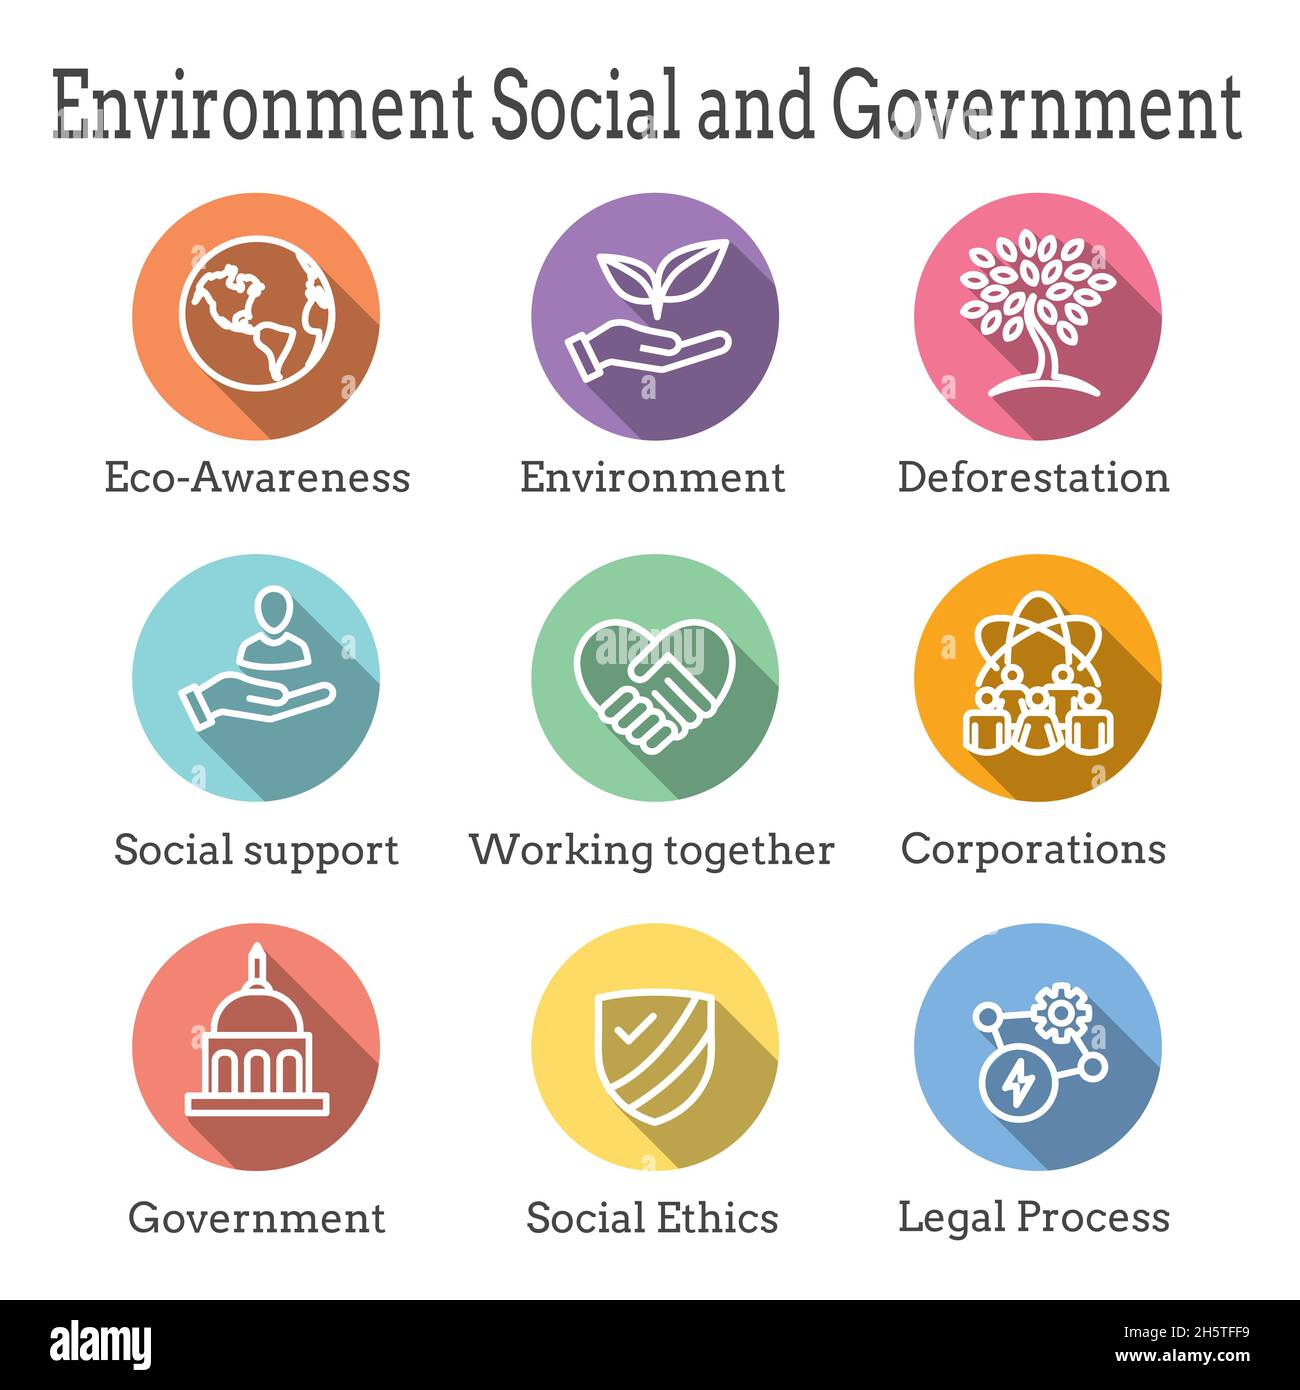 Government and society. Символы ESG на продуктах. Social government. ESG icon.